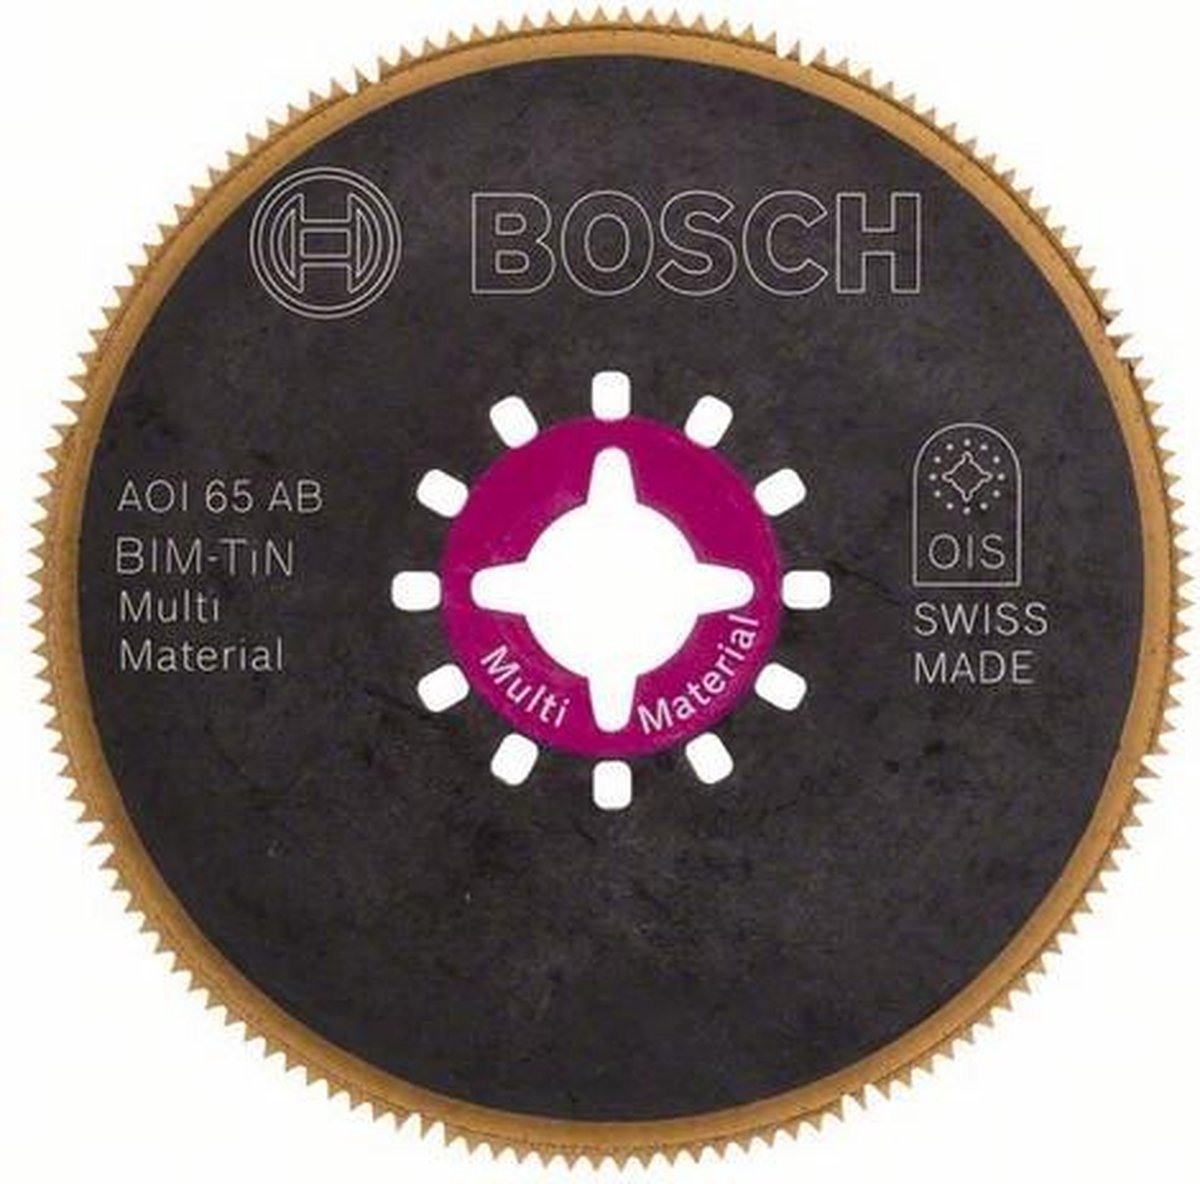 Bosch - BIM-TiN segmentzaagblad AOI 65 AB Multi Material 65 mm